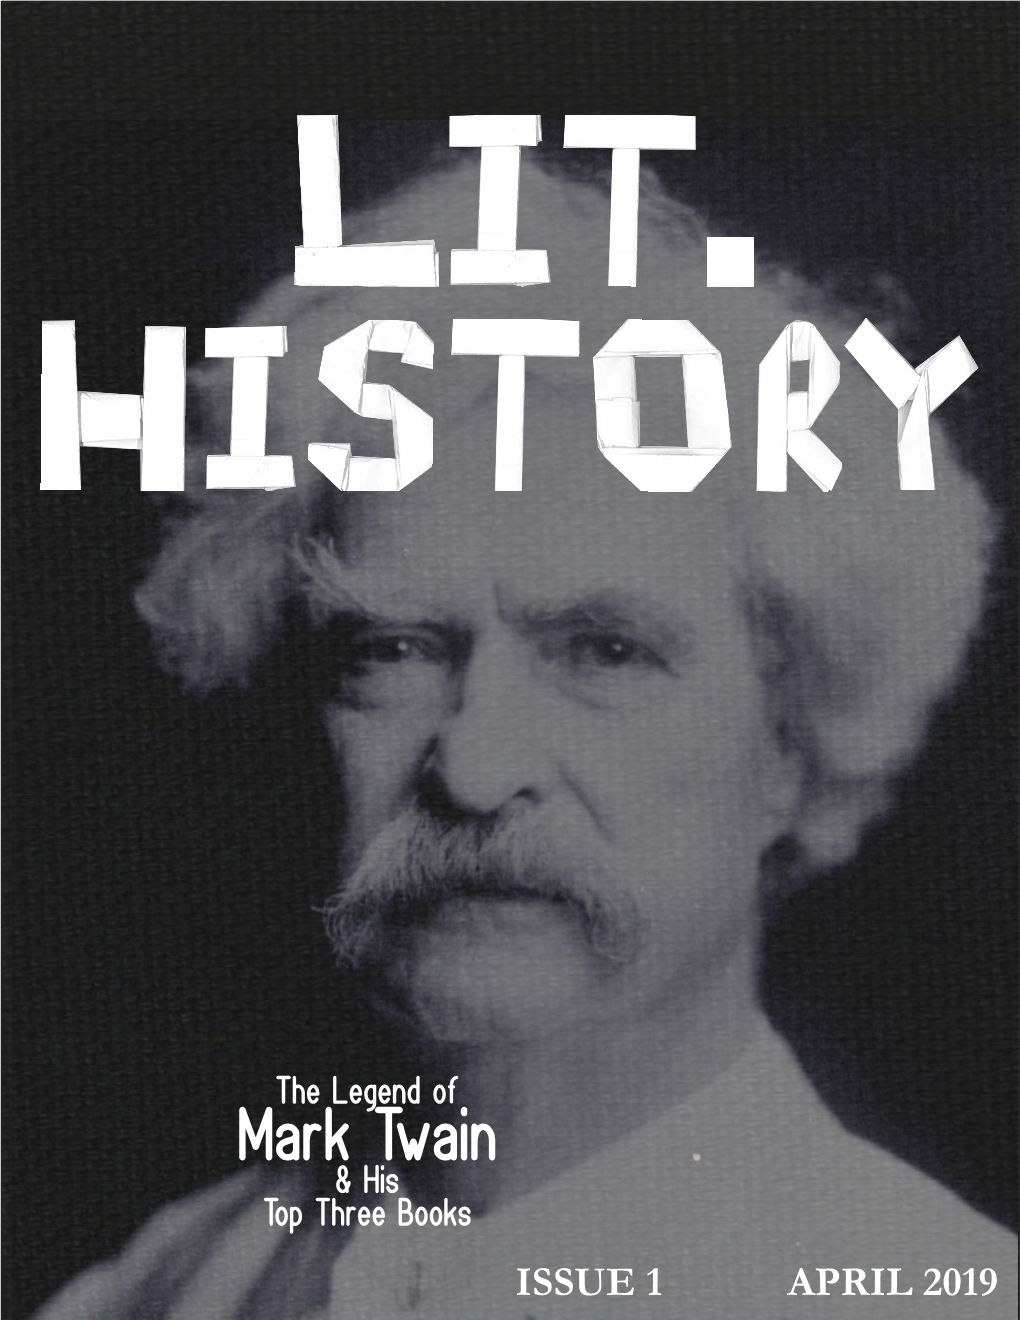 Mark Twain & His Top Three Books ISSUE 1 APRIL 2019